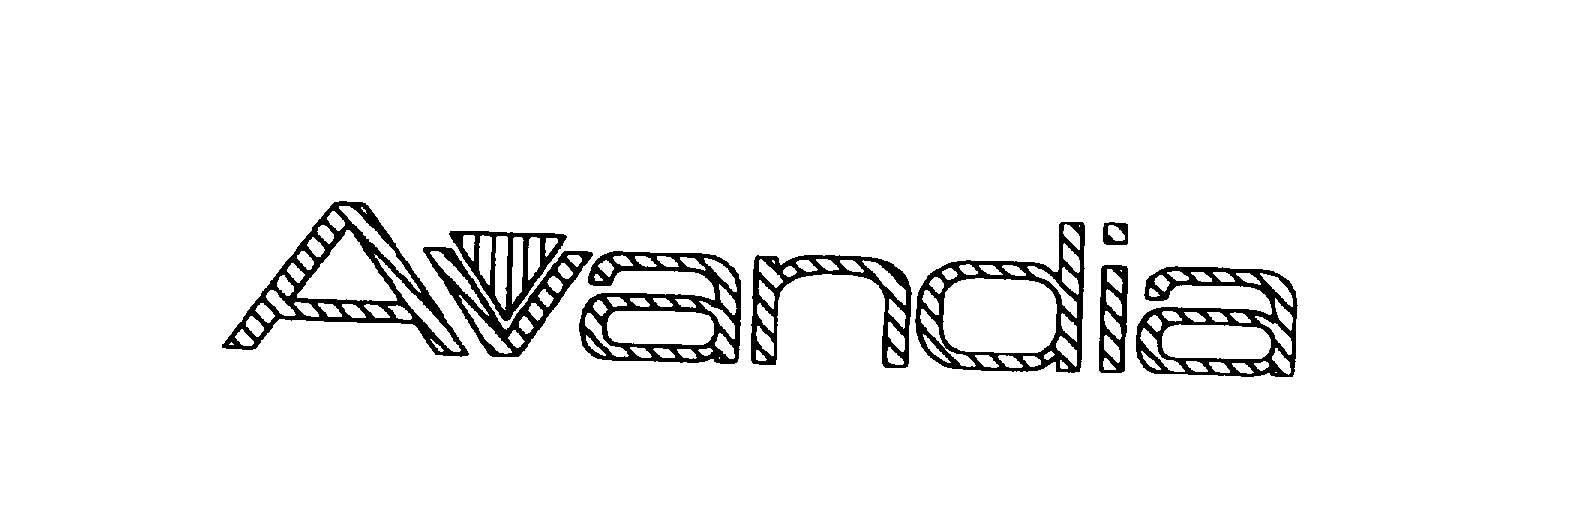 Trademark Logo AVANDIA